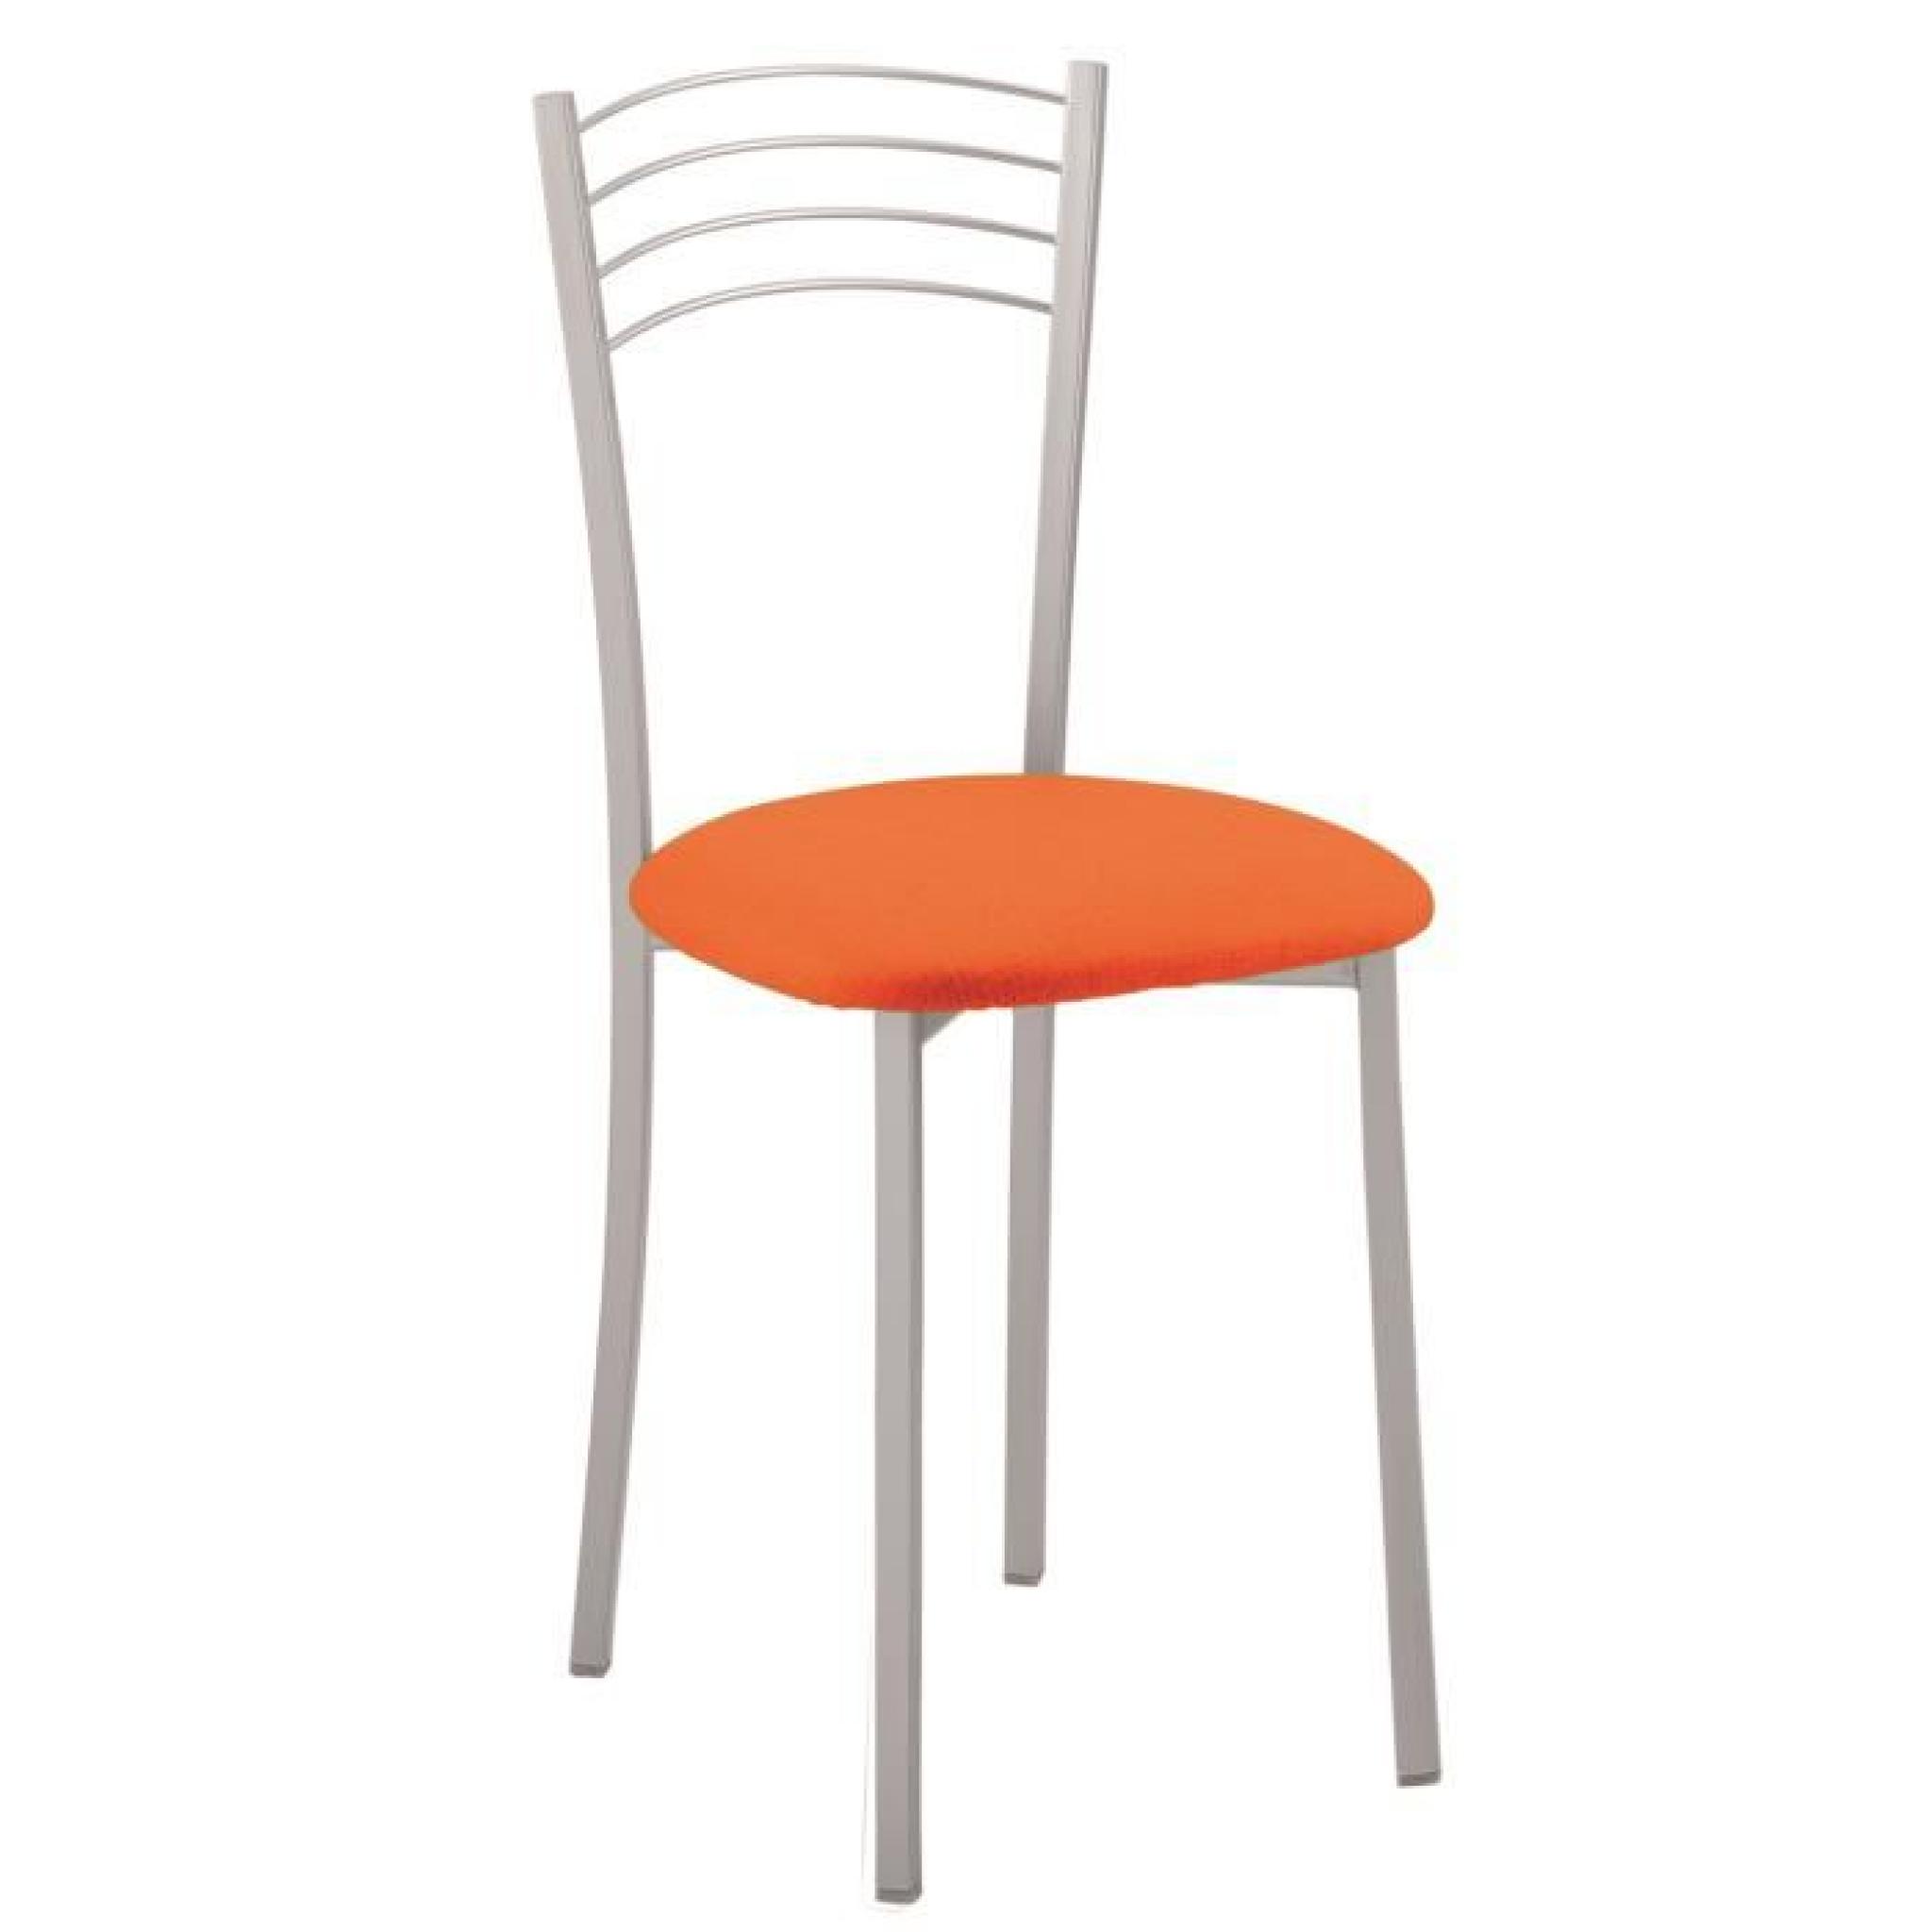 Chaise revetus orange, 400 x 450 x 890 mm